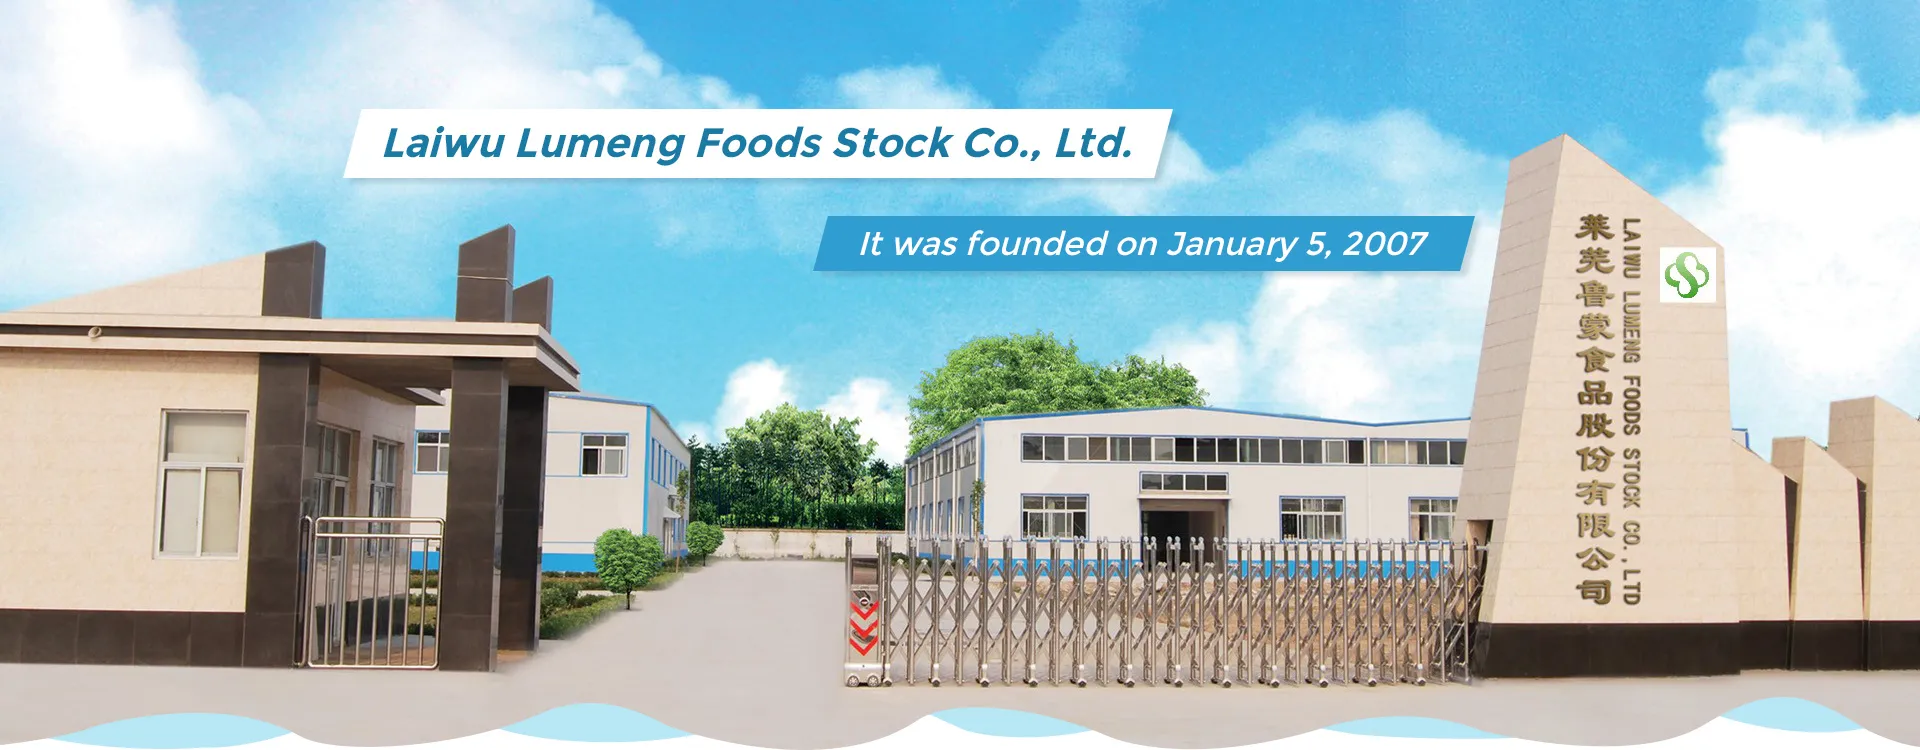 LAIWU LUMENG FOODS STOCK CO., LTD